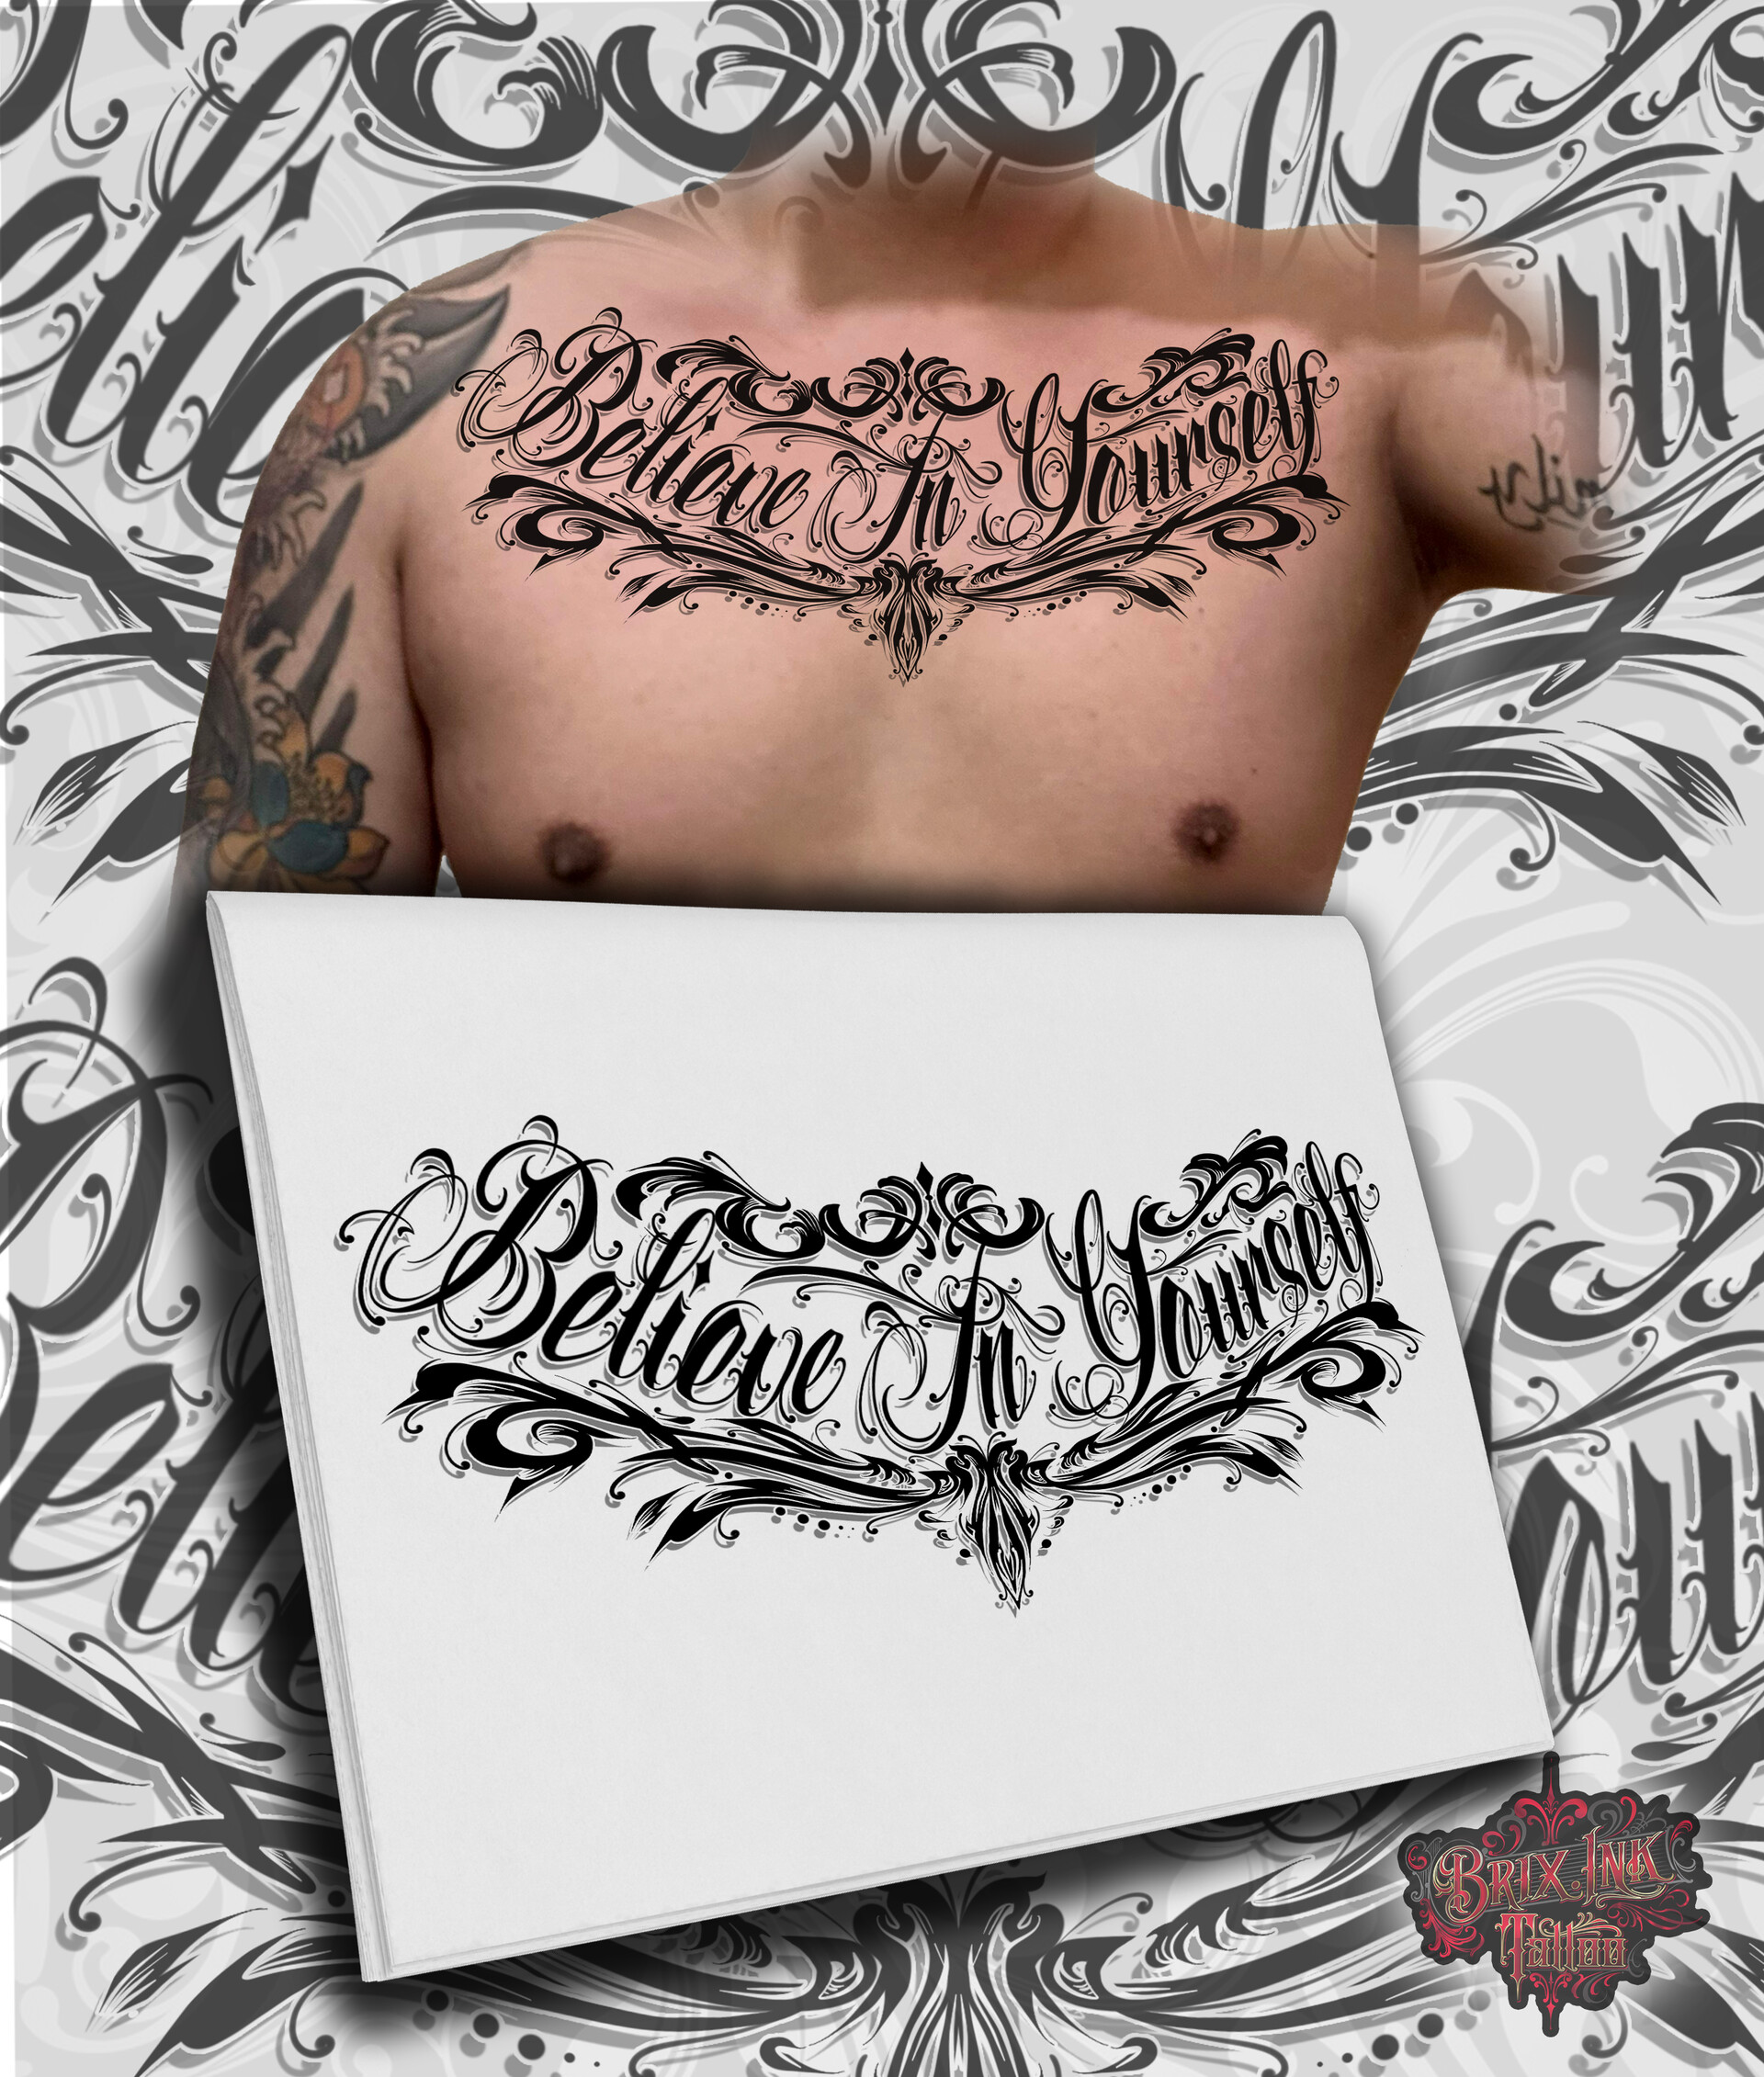 Gothic Tattoo Ideas  Designs for Gothic Tattoos